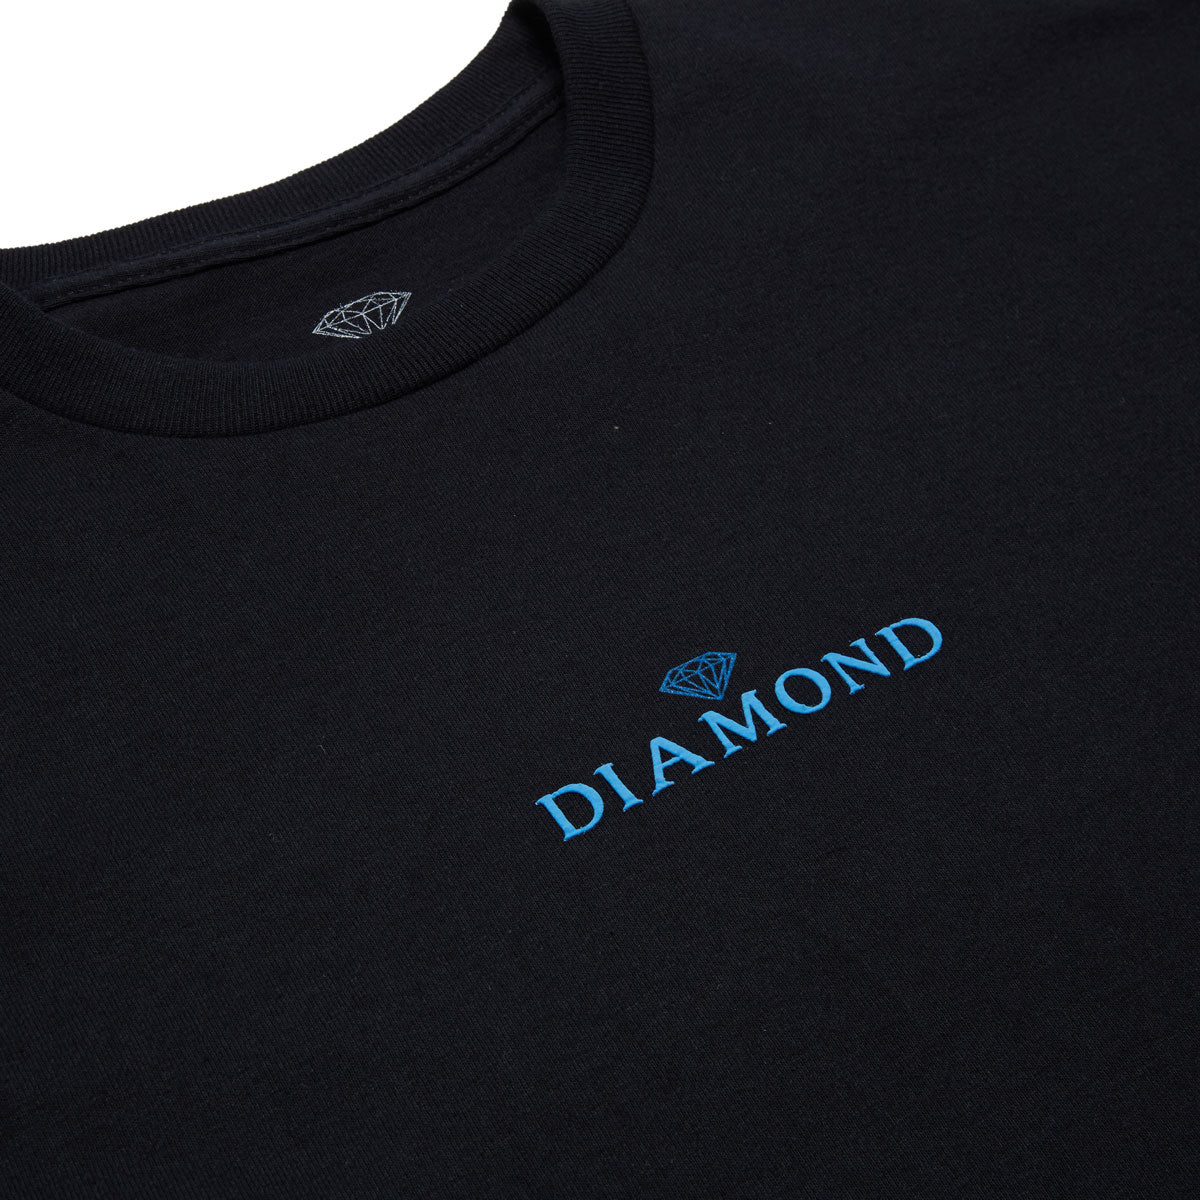 Diamond Supply Co. Classic T-Shirt - Black image 2